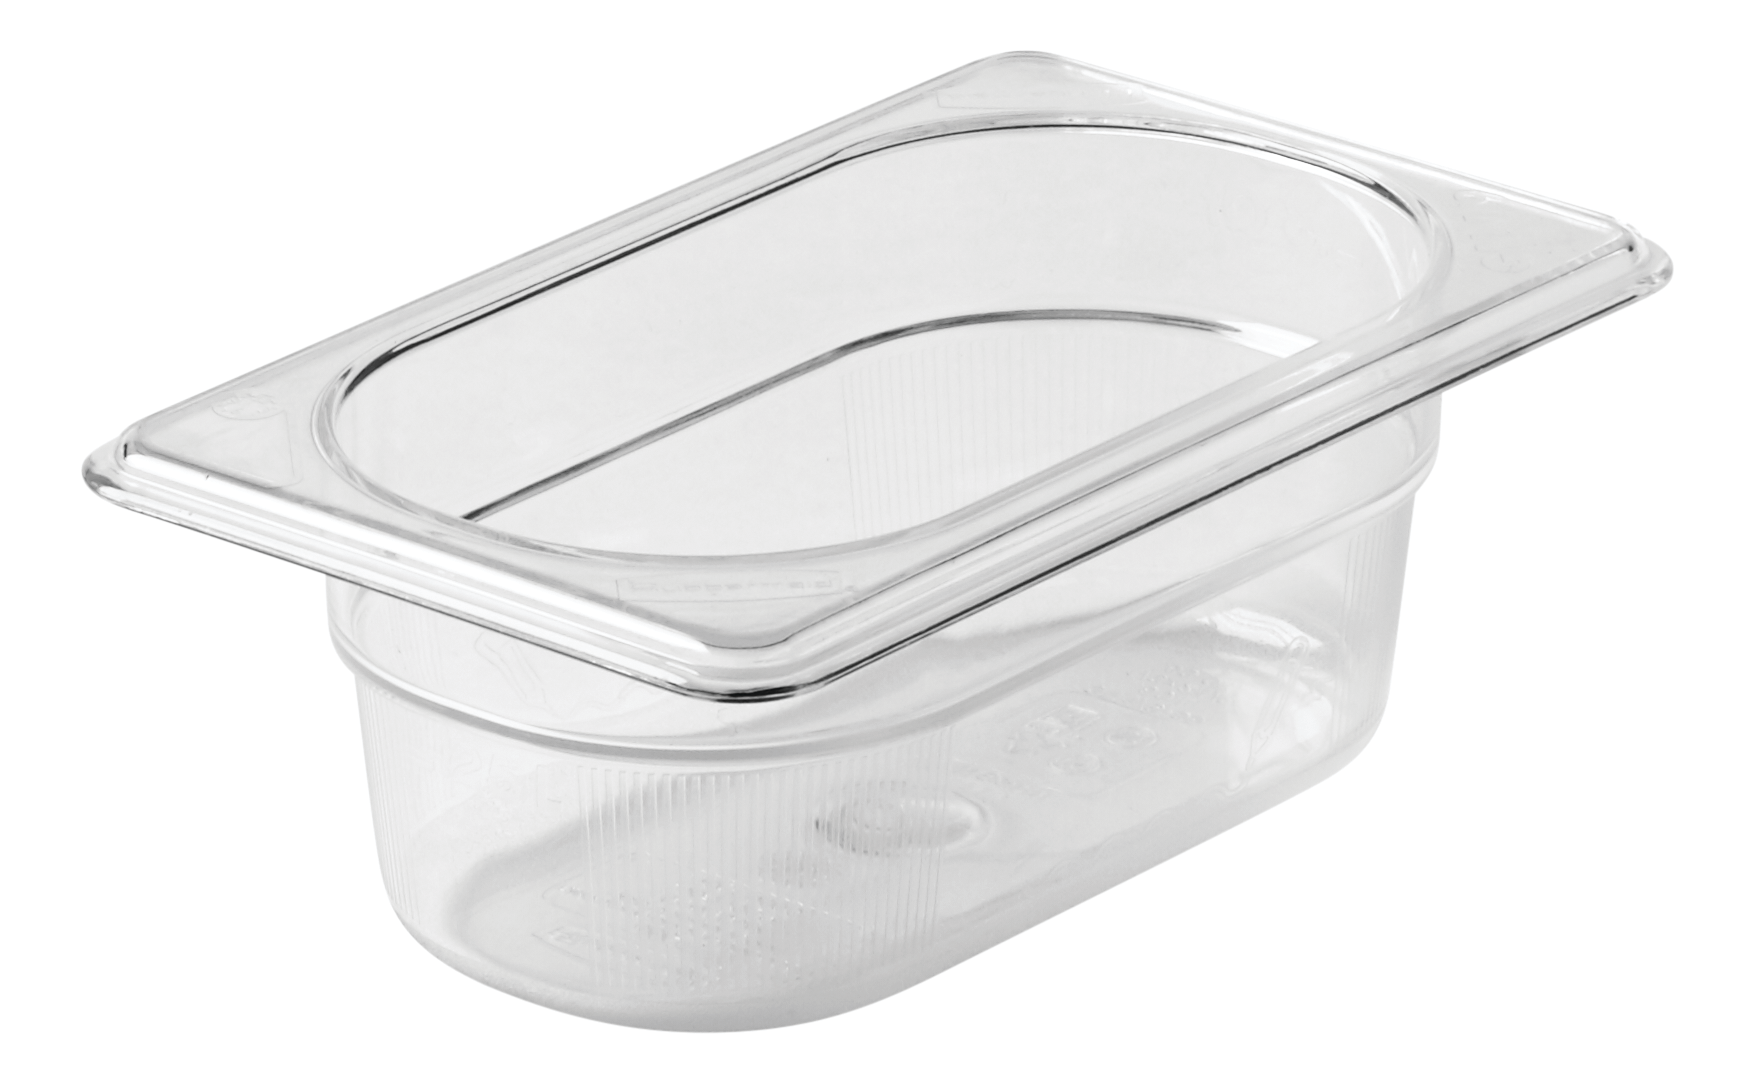 Rubbermaid FG352800WHT White Polyethylene Food Storage Box - 26 x